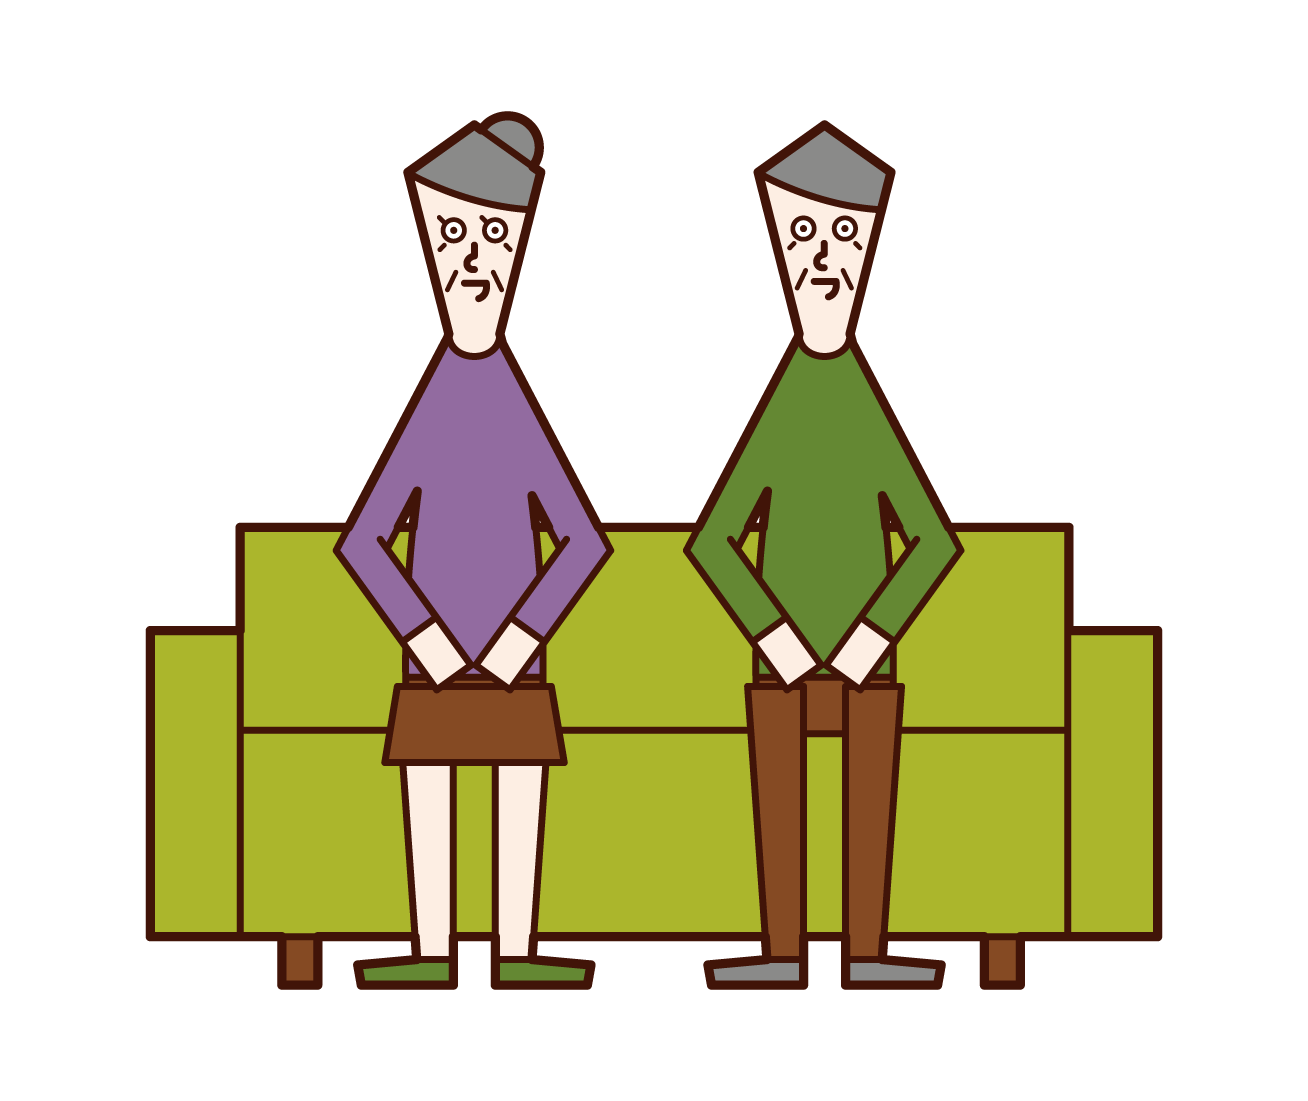 Illustration of an elderly couple